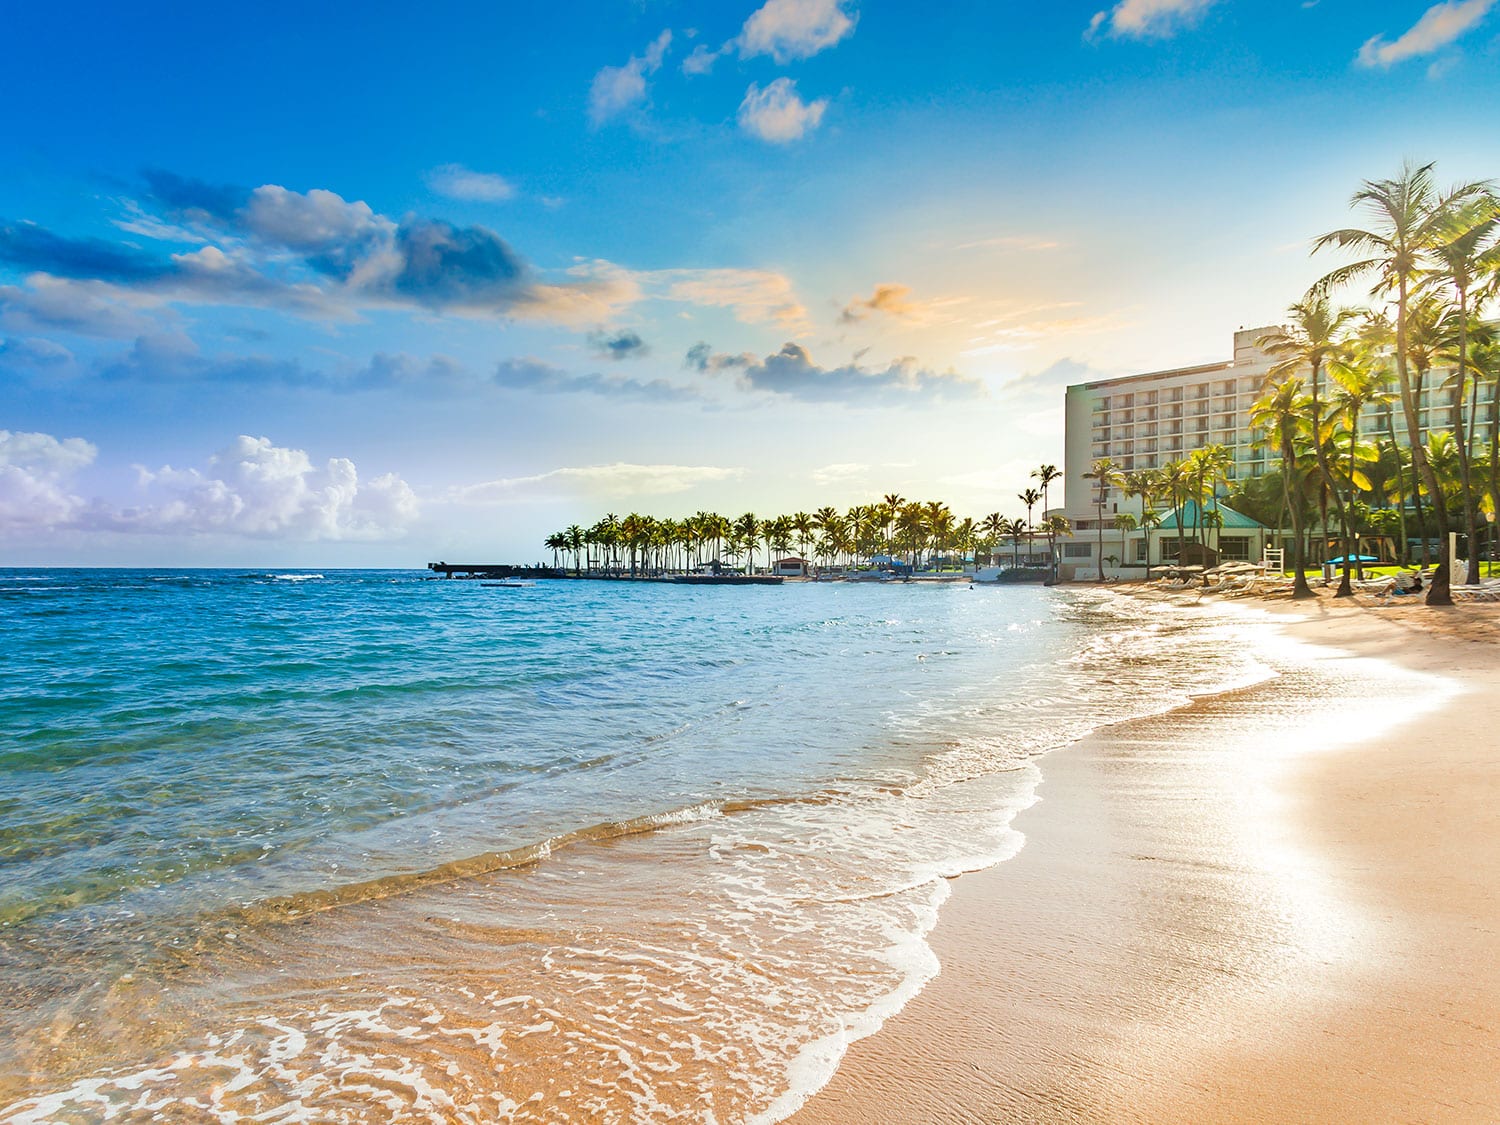 The beach at the Caribe Hilton resort in San Juan, Puerto Rico.